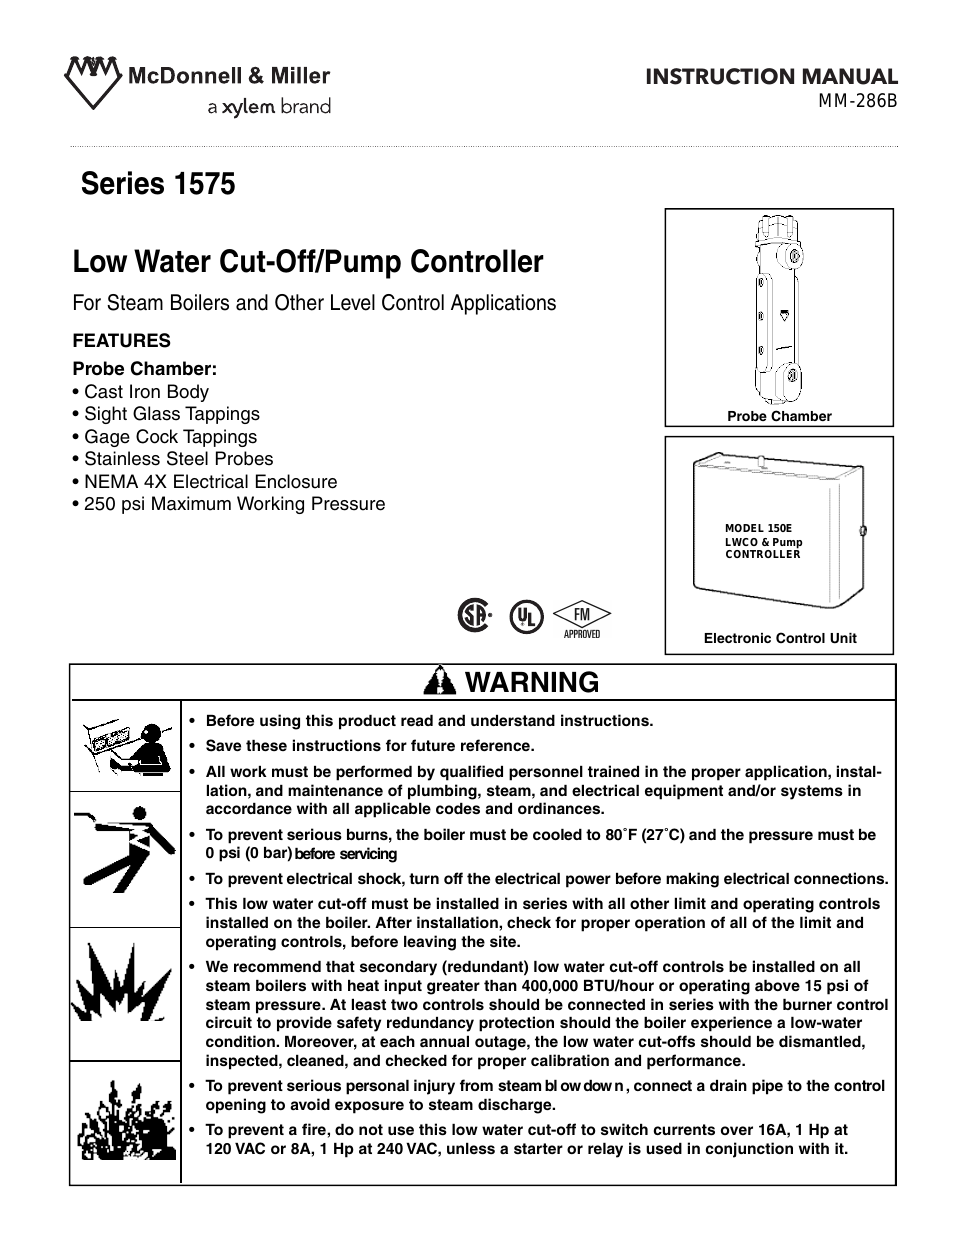 MM 286B Series 1575 – Low Water Cut-Off/Pump Controller